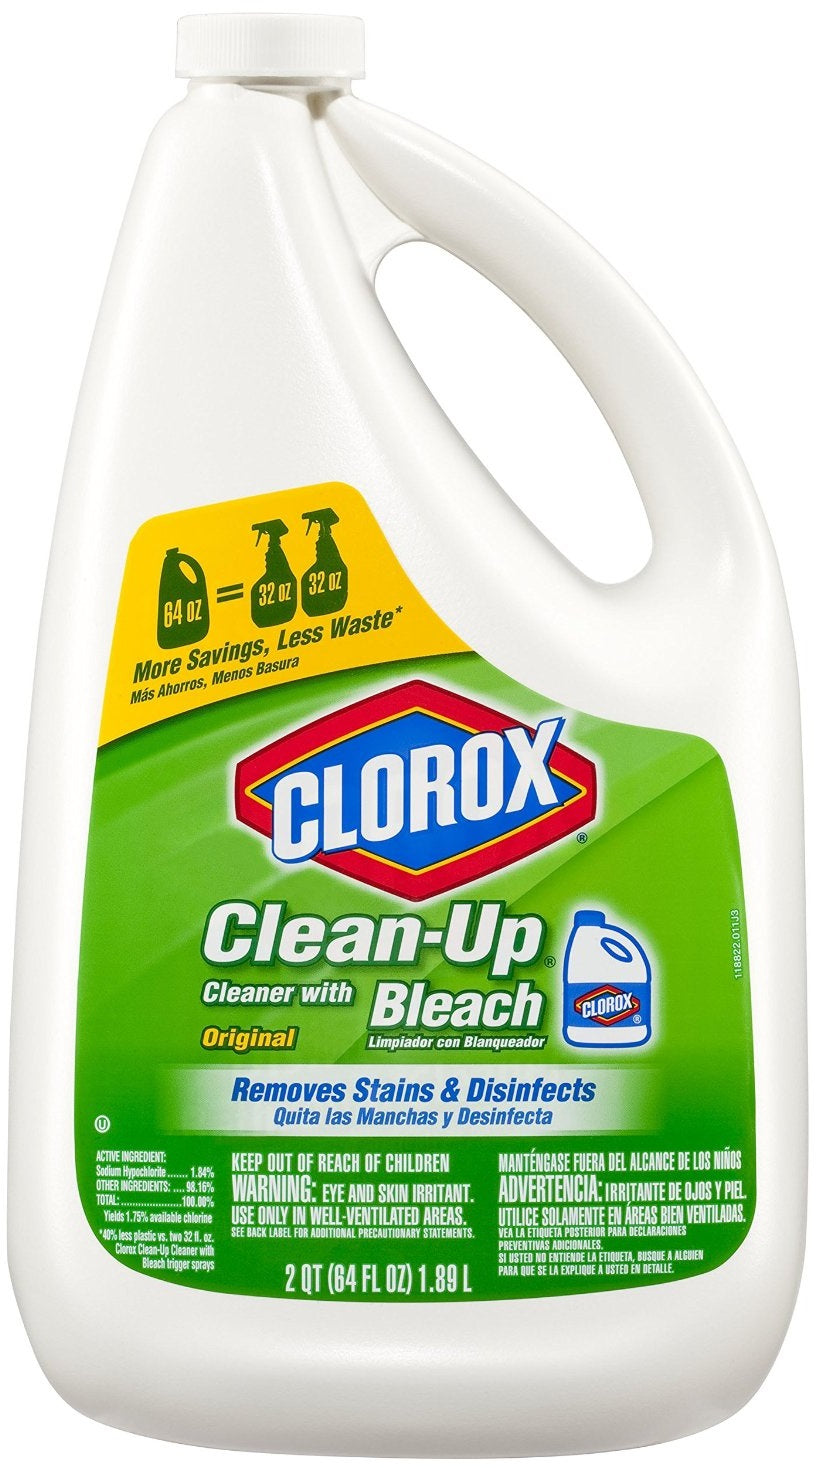 Clorox 01151 Clean-Up Cleaner with Bleach, 64 Oz